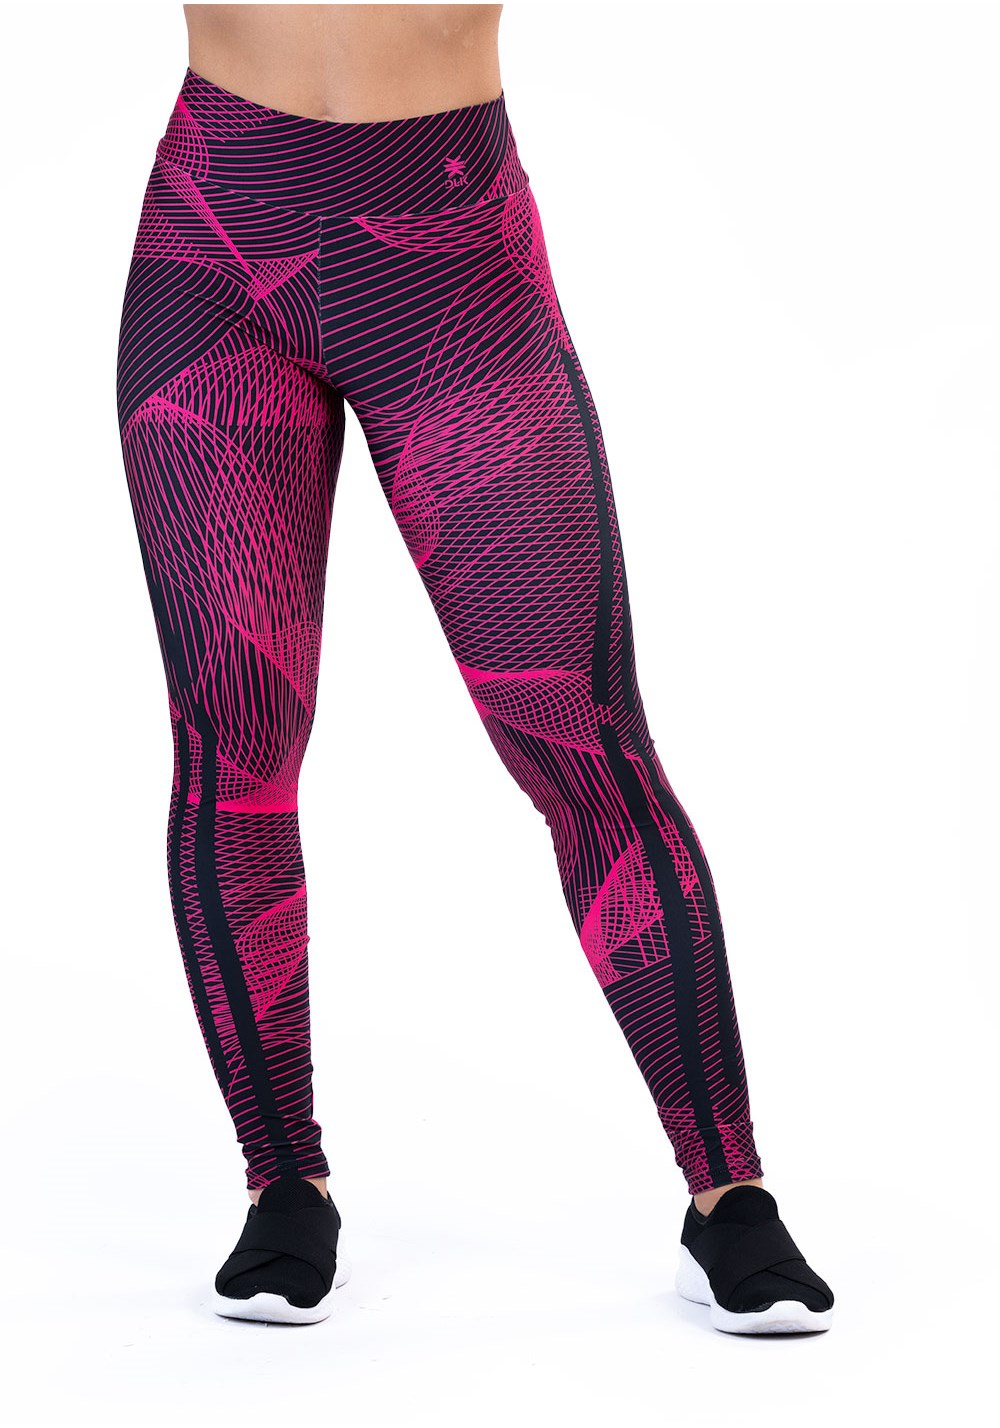 https://dlkmodas.fbitsstatic.net/img/p/legging-fitness-feminina-new-printed-estampada-gradil-pink-82289/304150-3.jpg?w=1000&h=1428&v=no-value